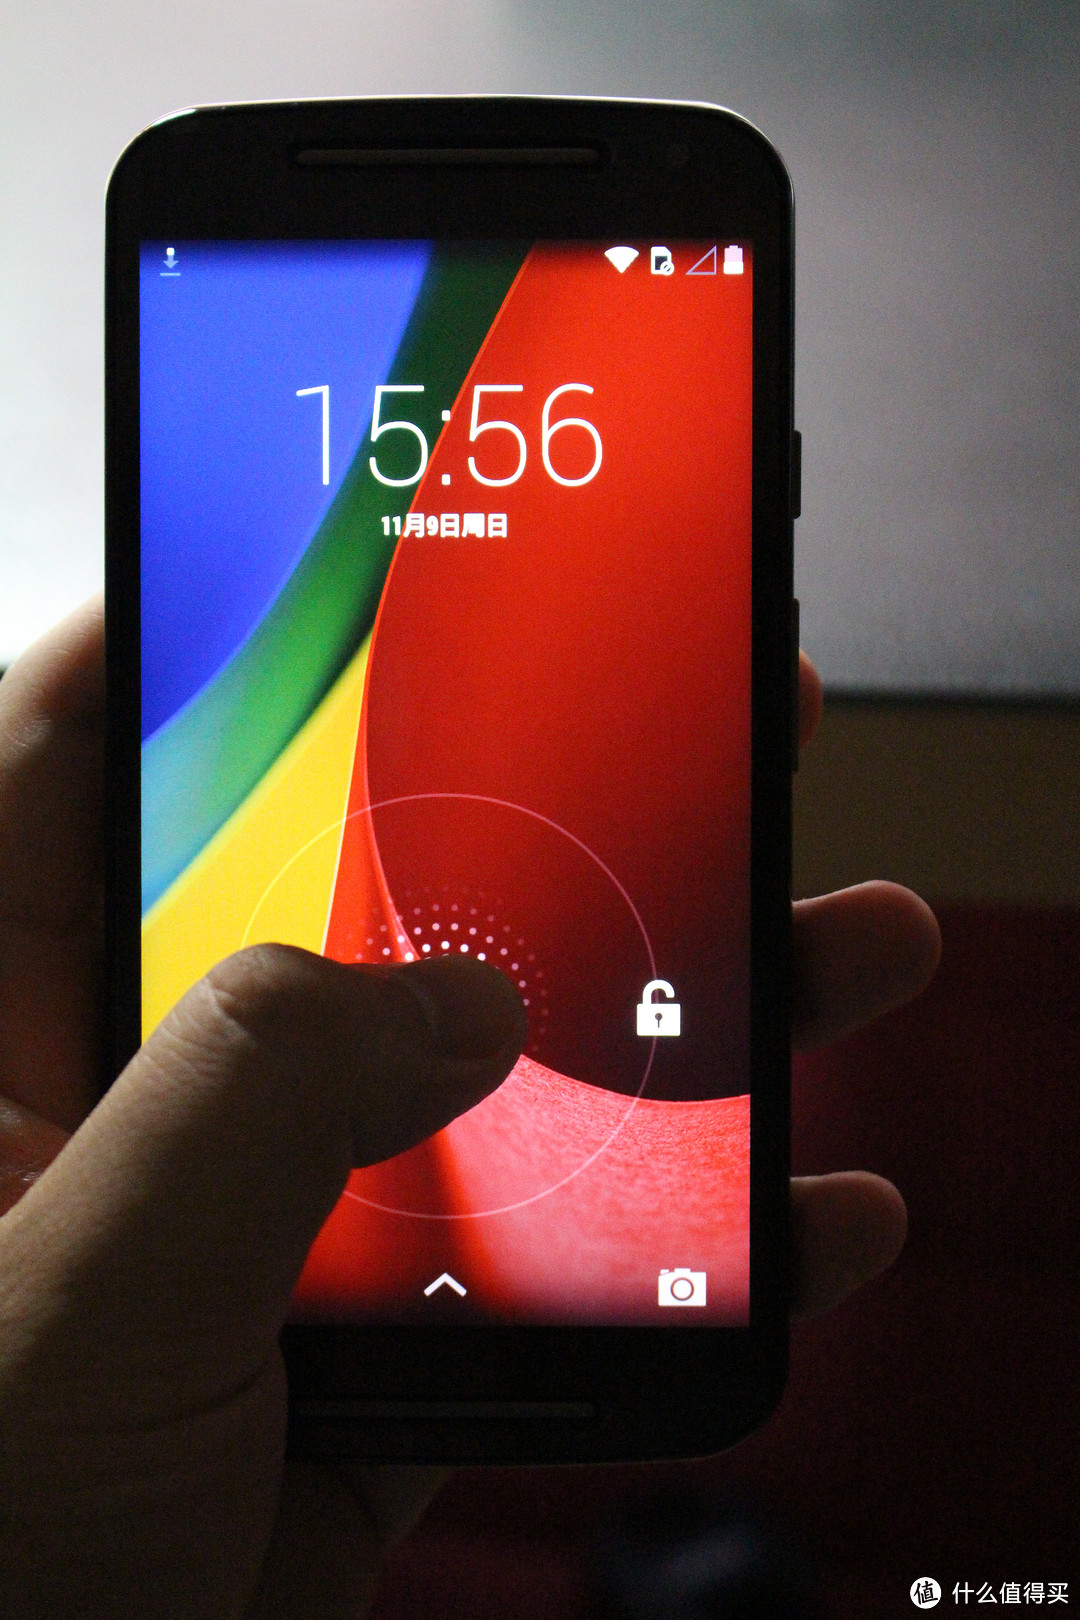 Motorola Moto G (2nd generation) 智能手机 上手体验